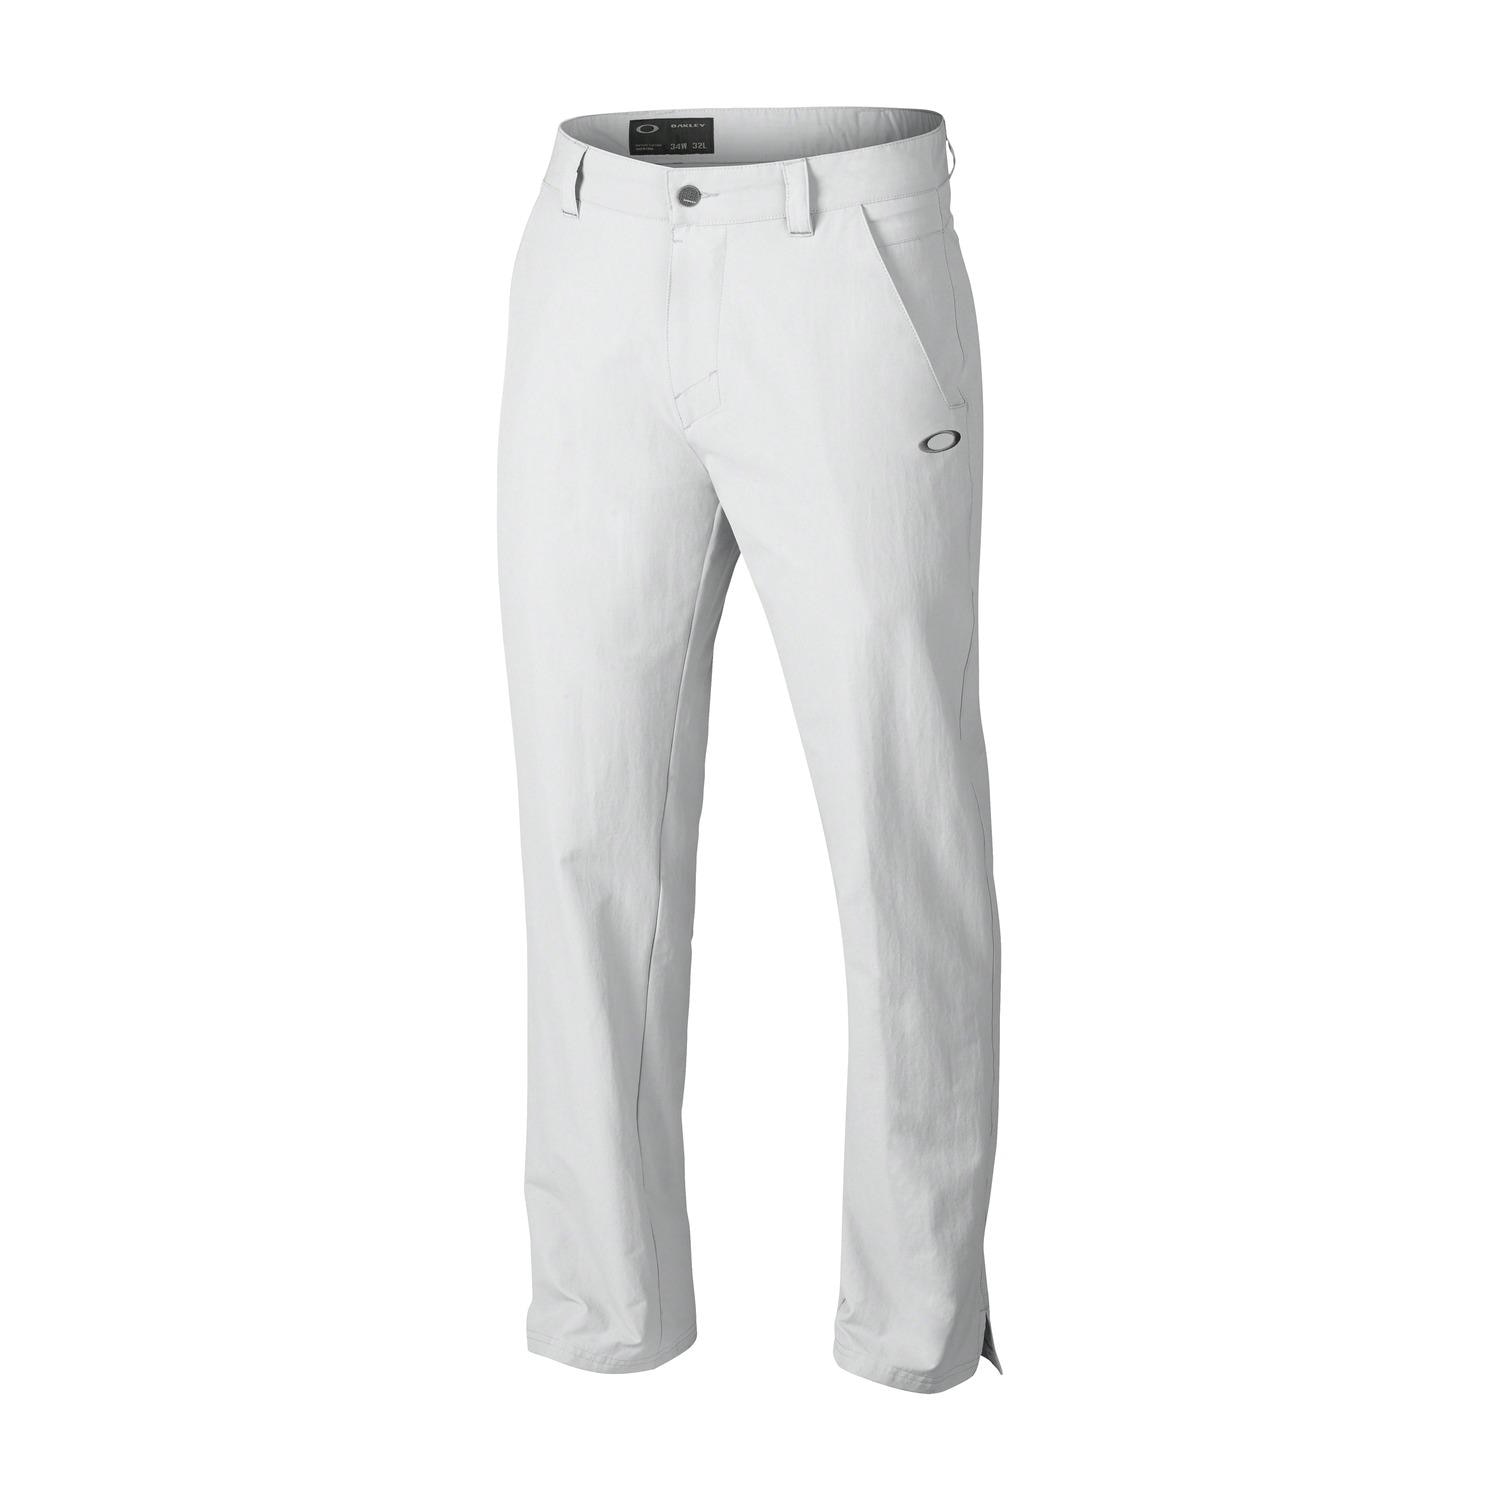 Golf Pants 2.5 - White - 421977-100 